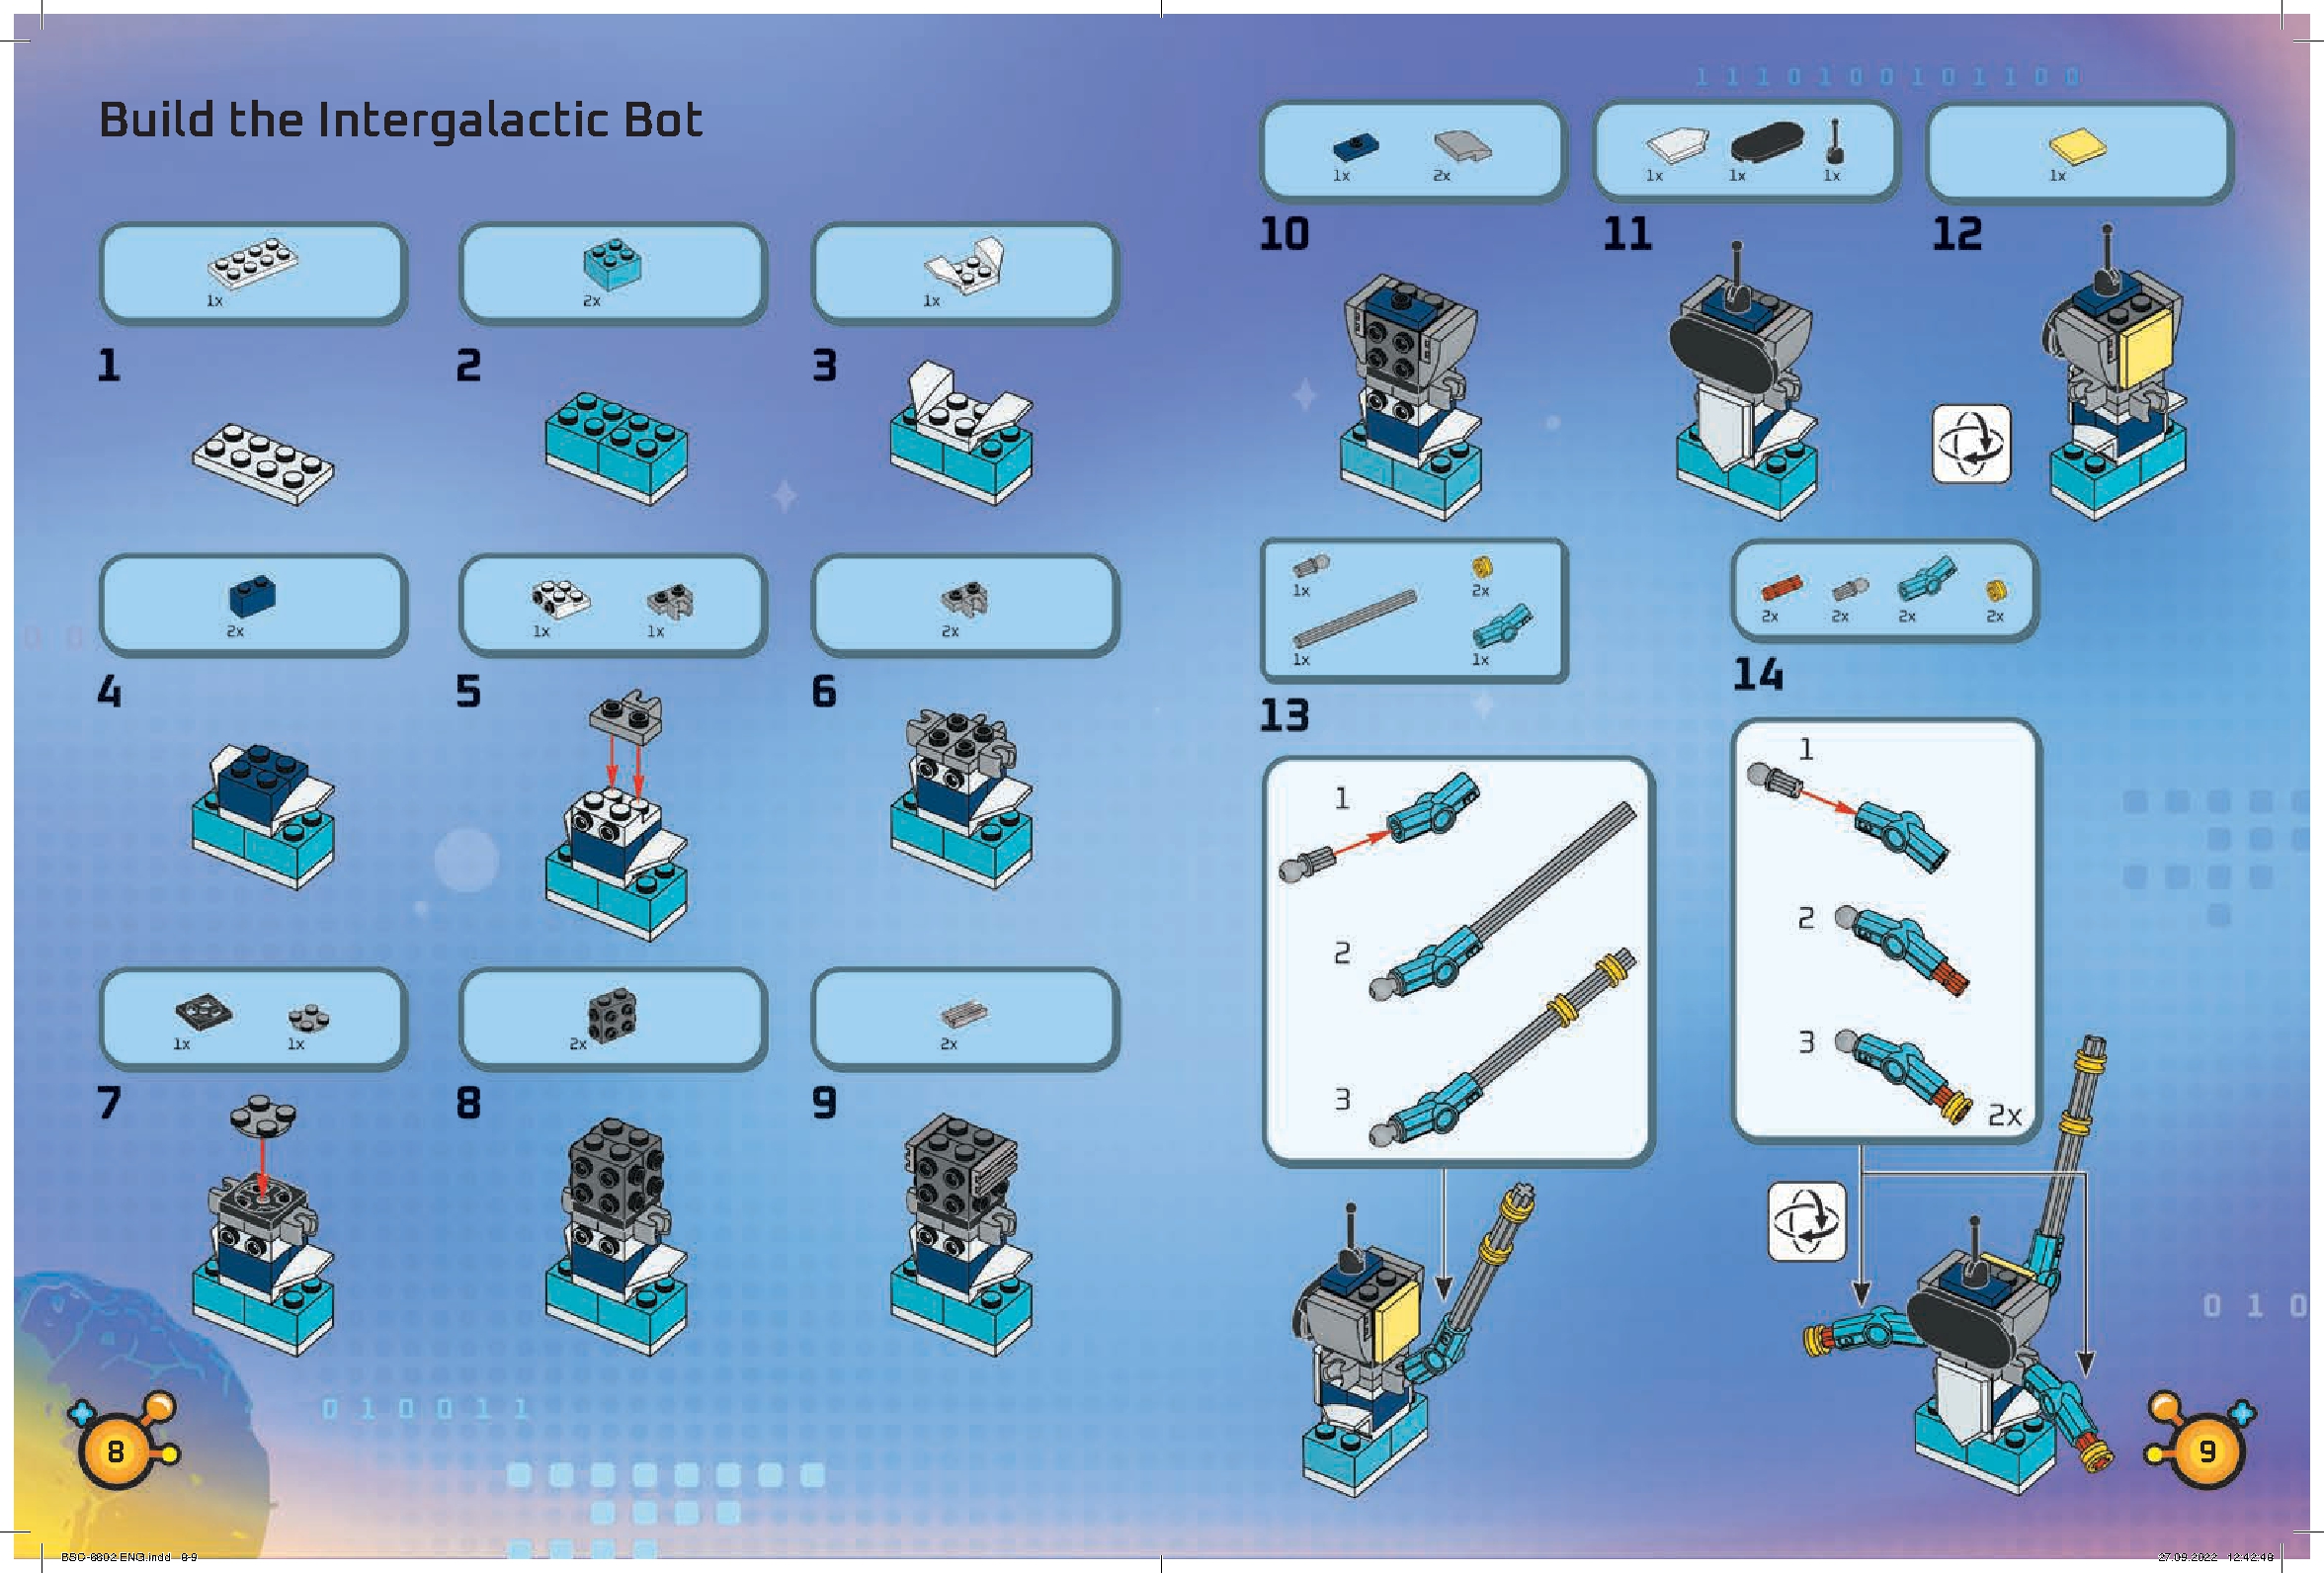 LEGO Books. Build and Stick: Robots